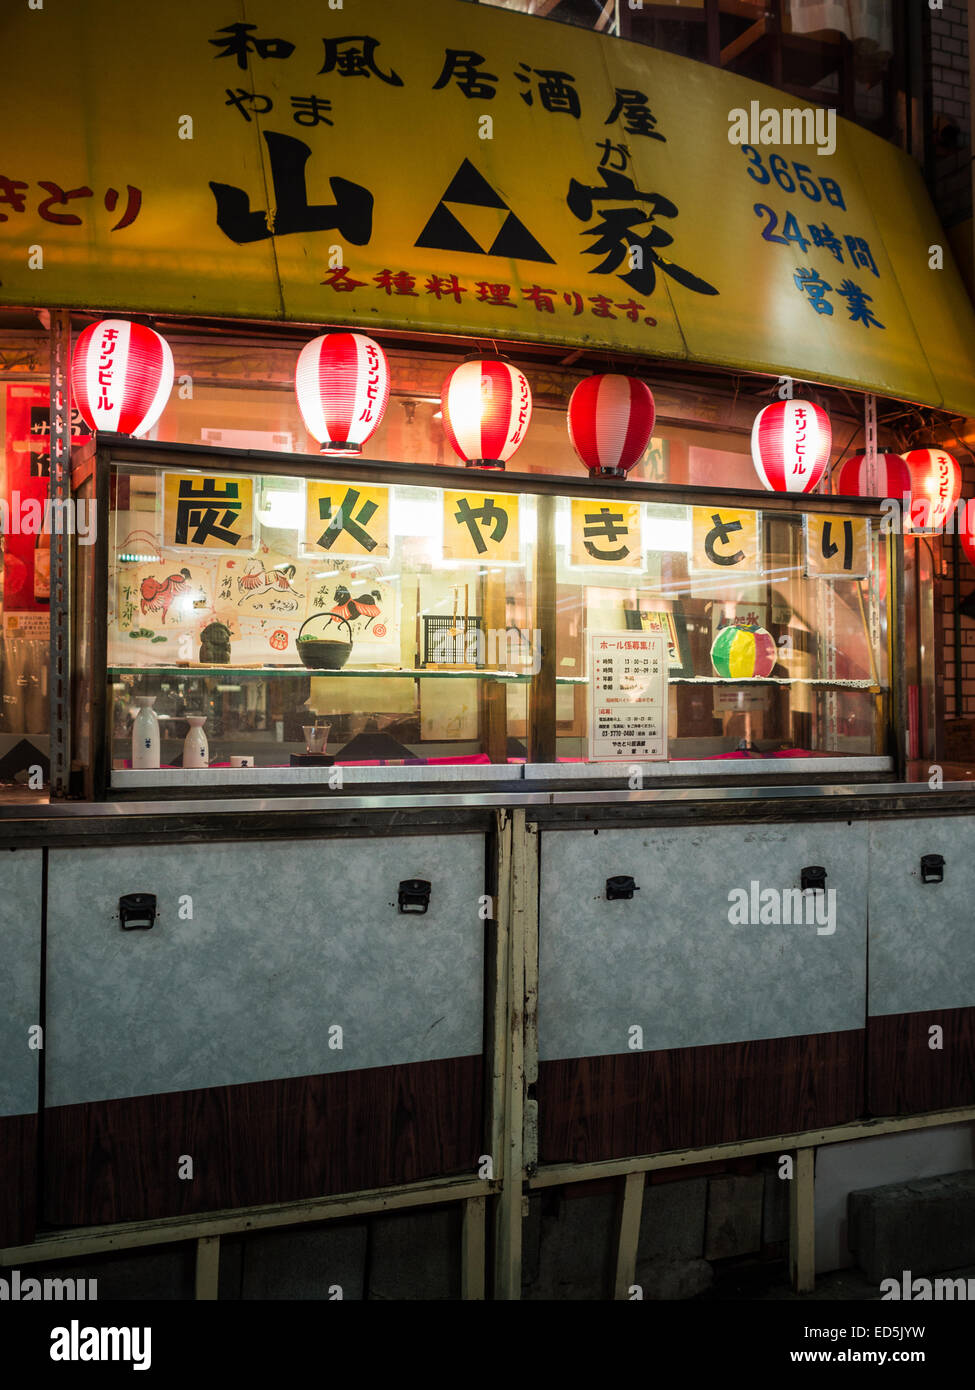 Tokyo street food truck Stock Photo